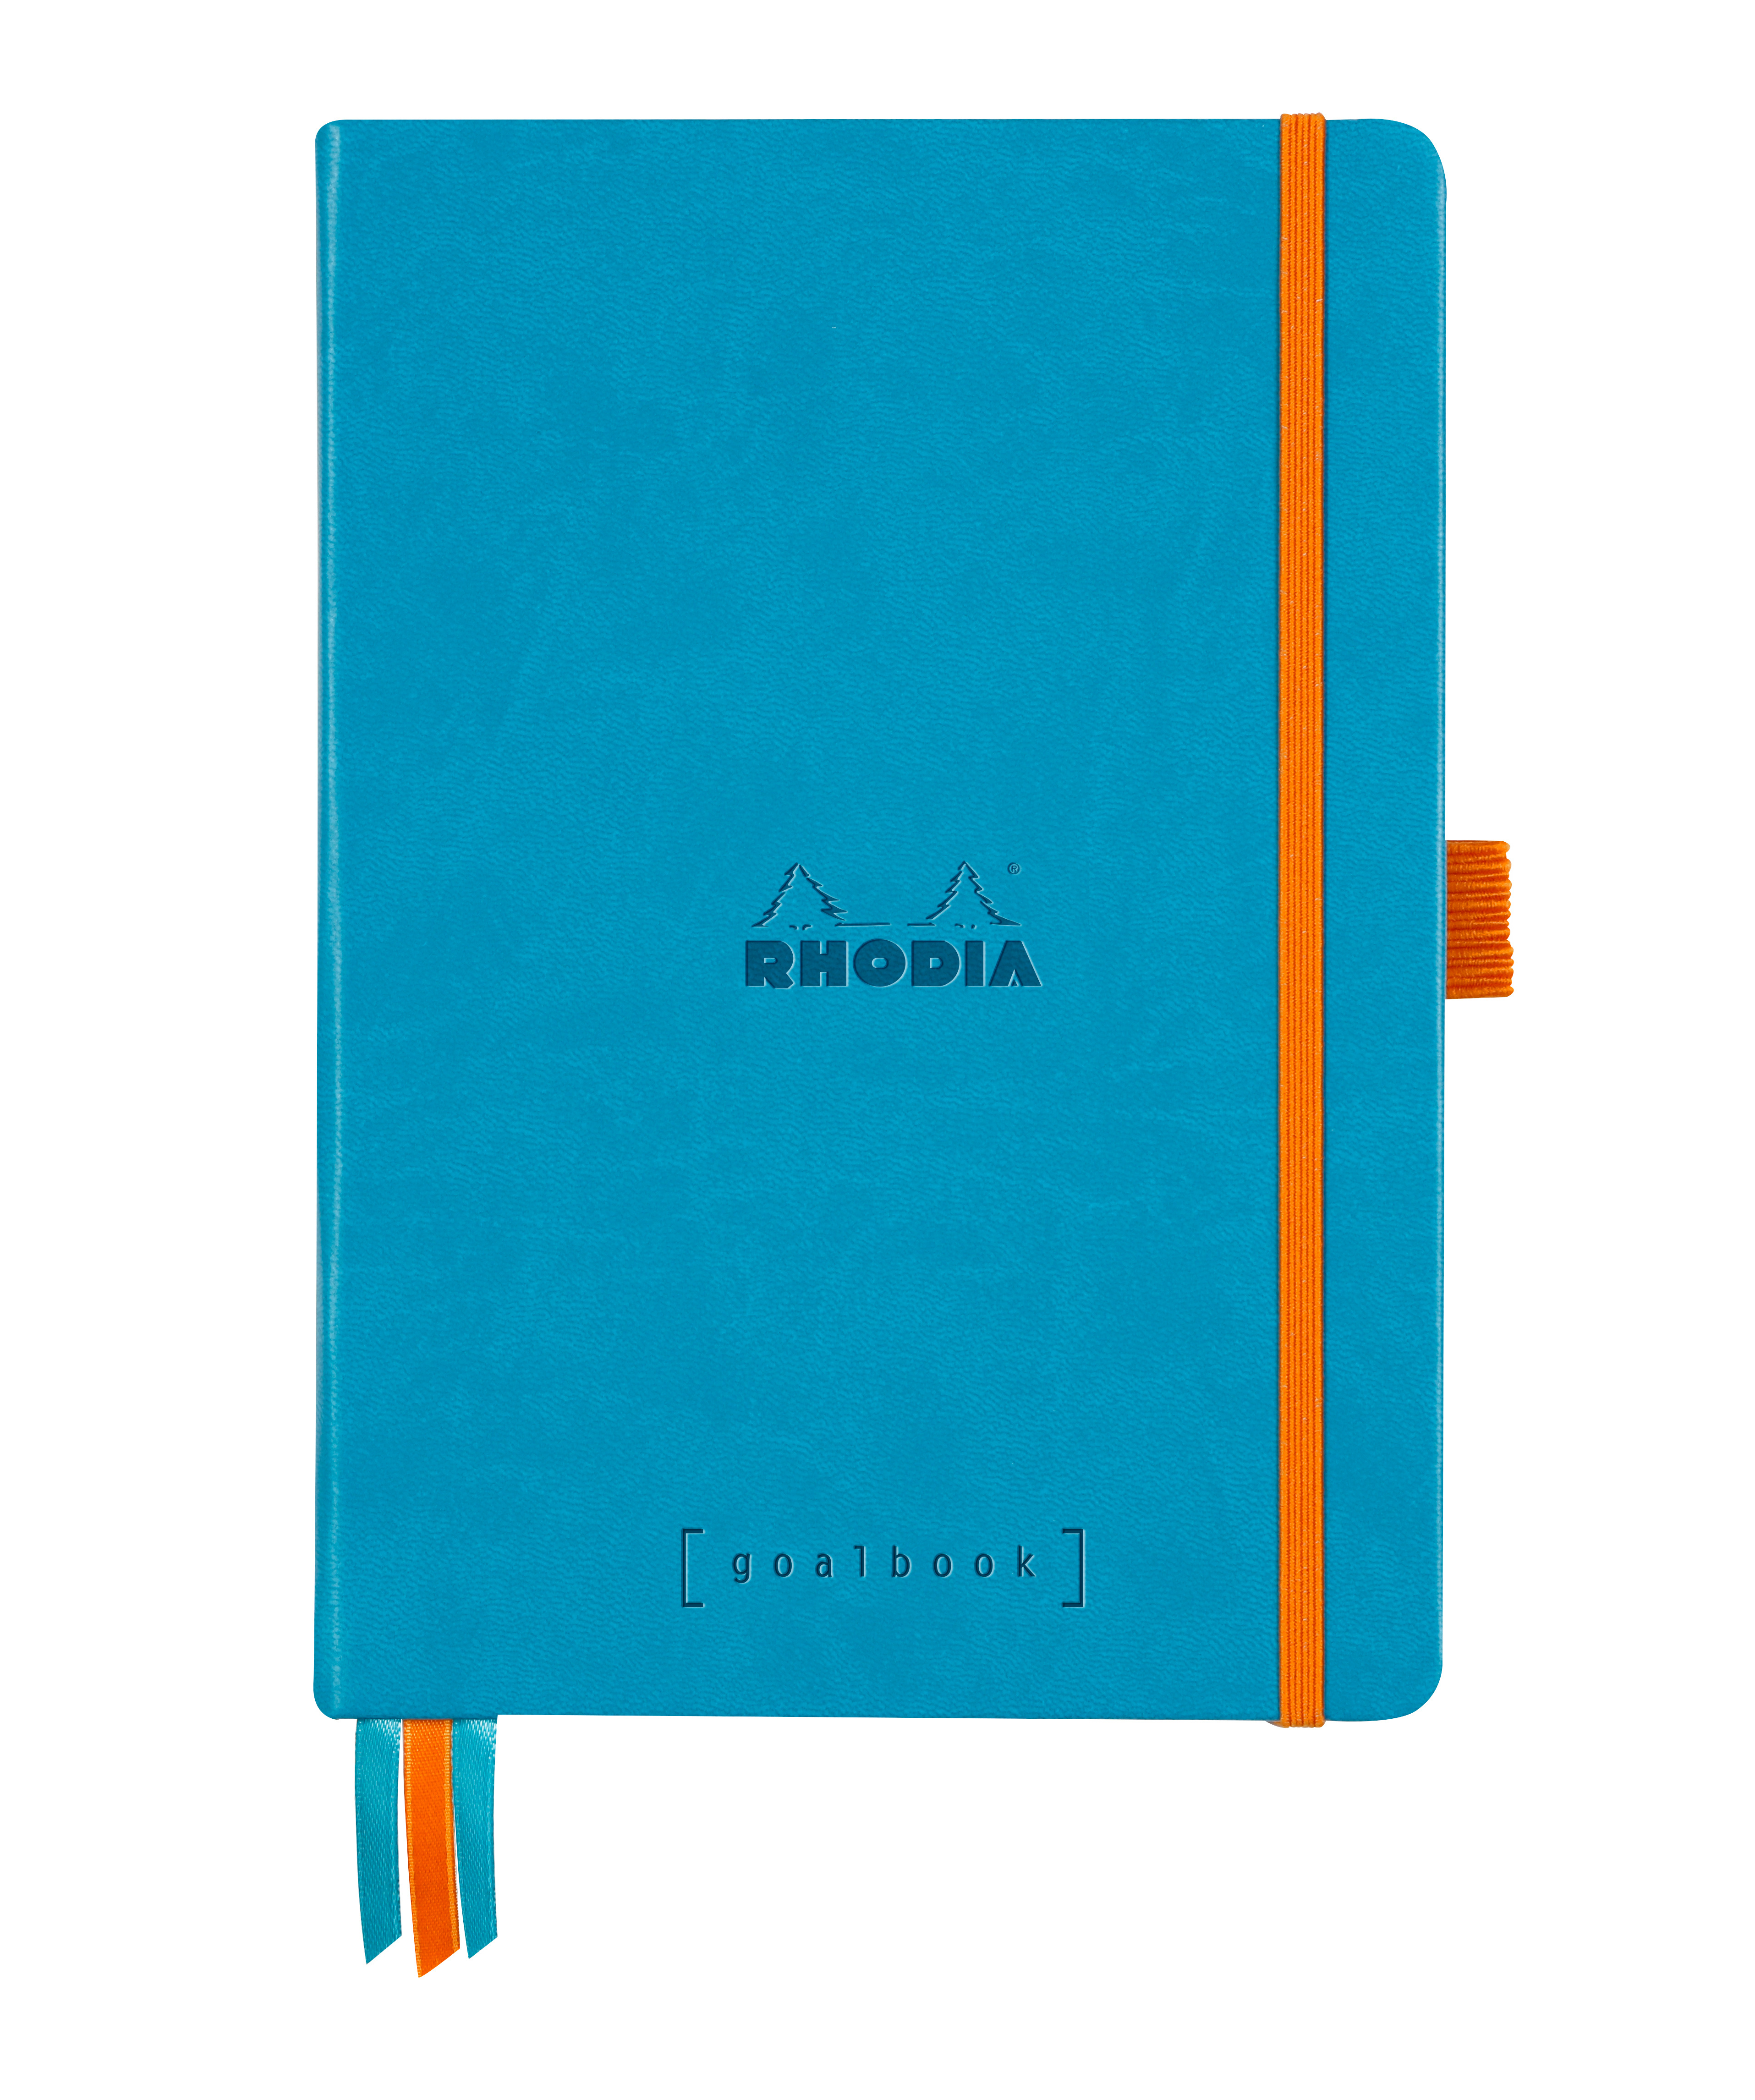 RHODIA Goalbook Carnet A5 118576C Hardcover turquoise 240 f. Hardcover turquoise 240 f.